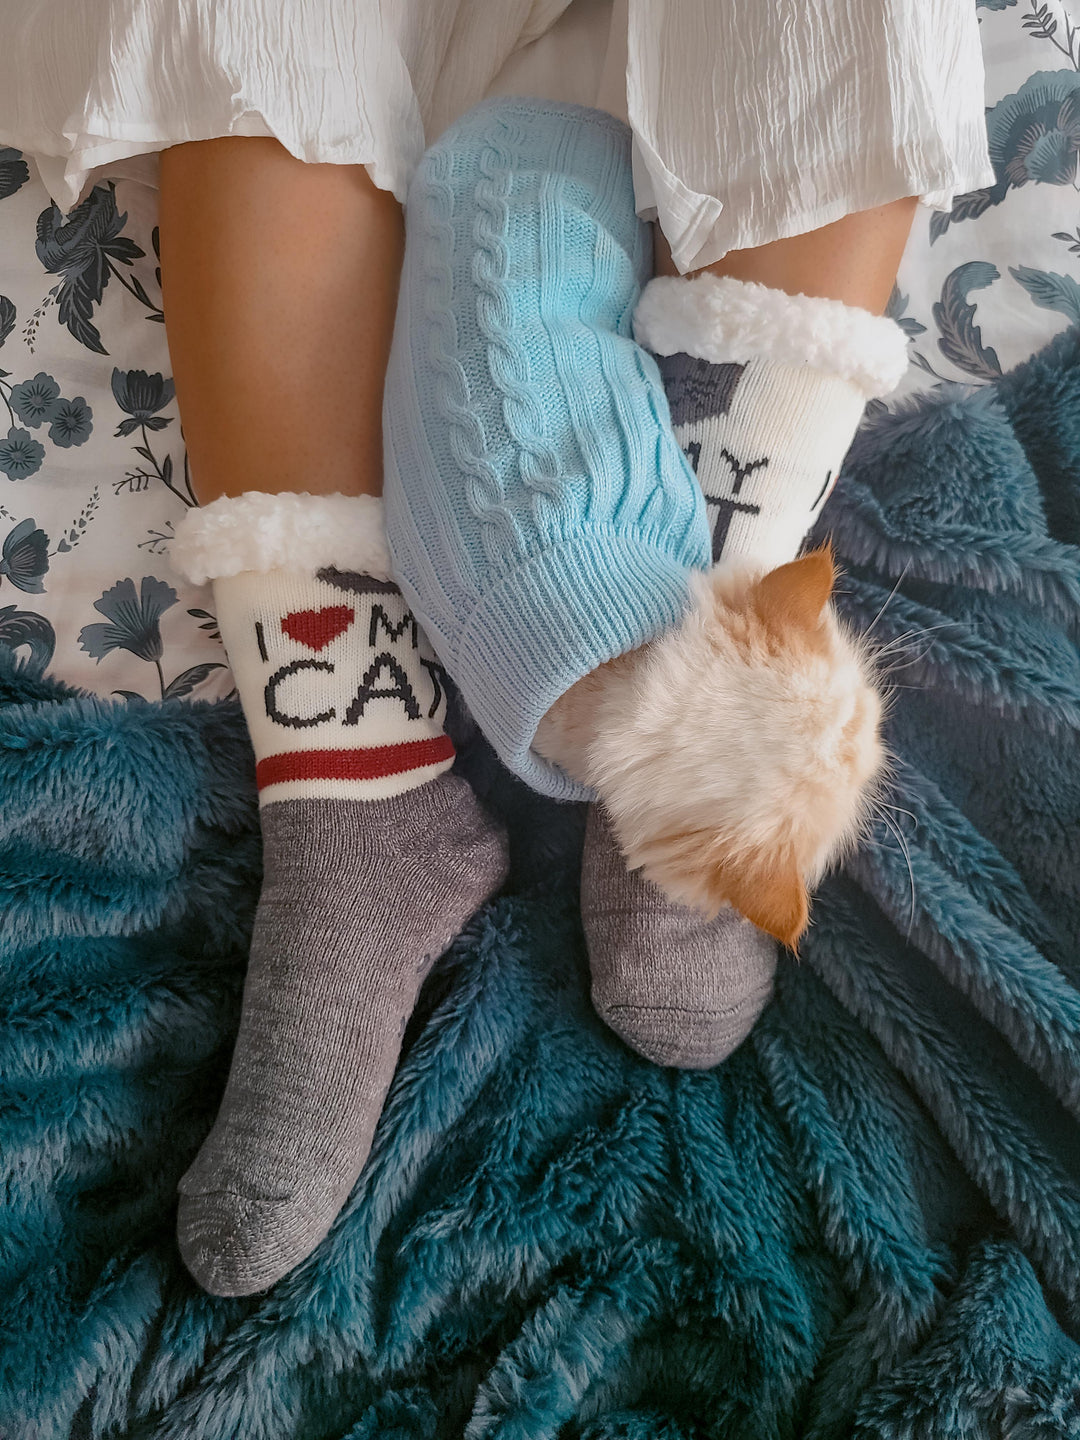 Northern Comfort Kid's Little Bear Sherpa-Lined Grip Slipper Socks